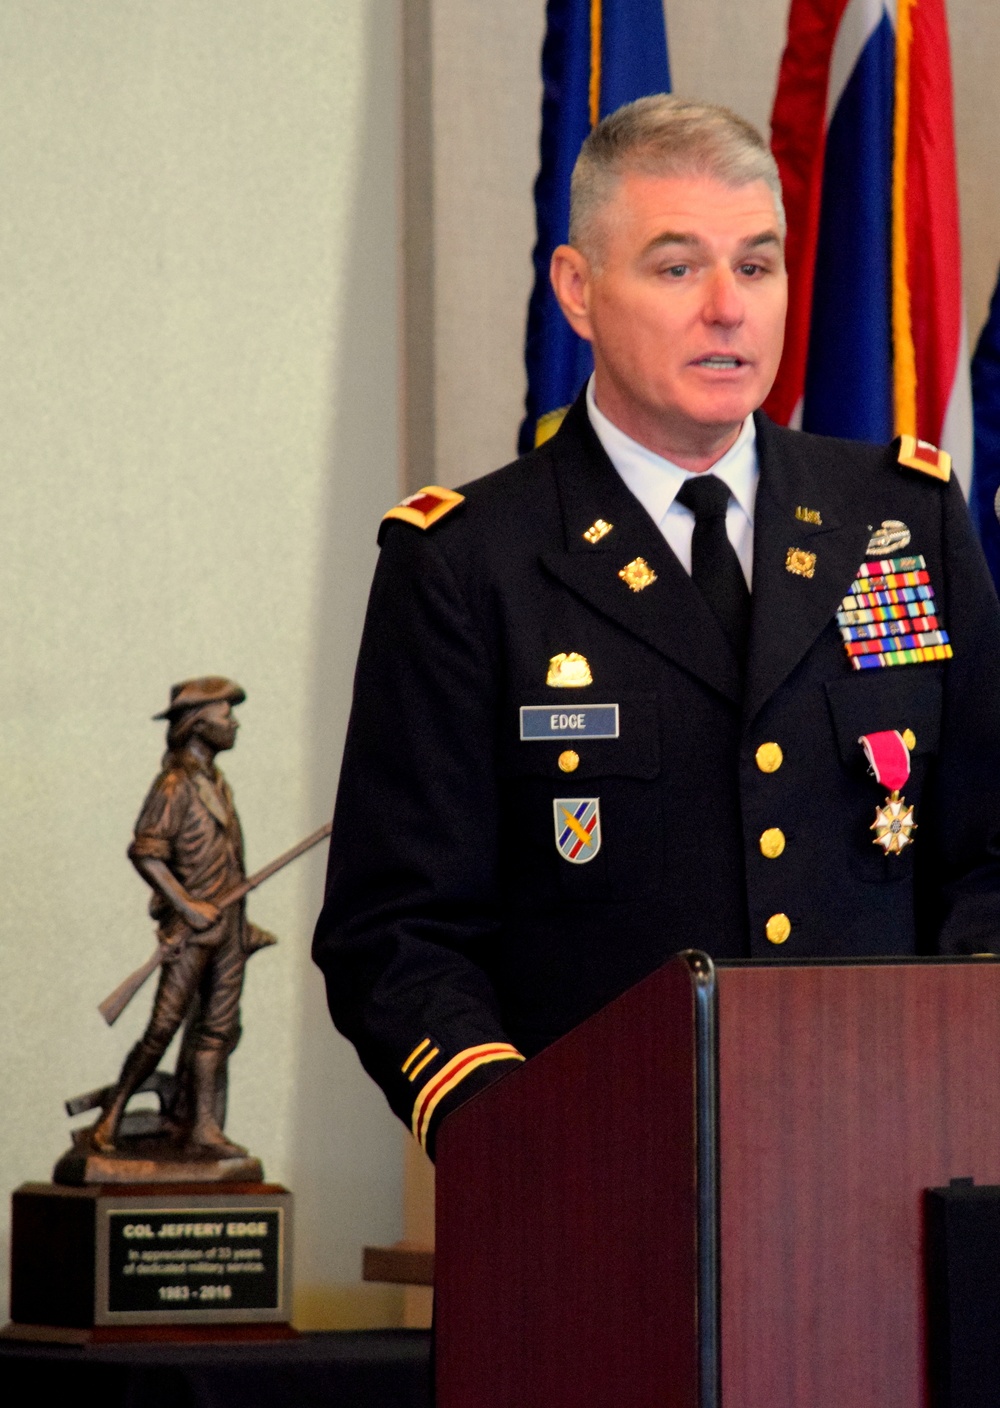 Col. Edge Retirement Remarks